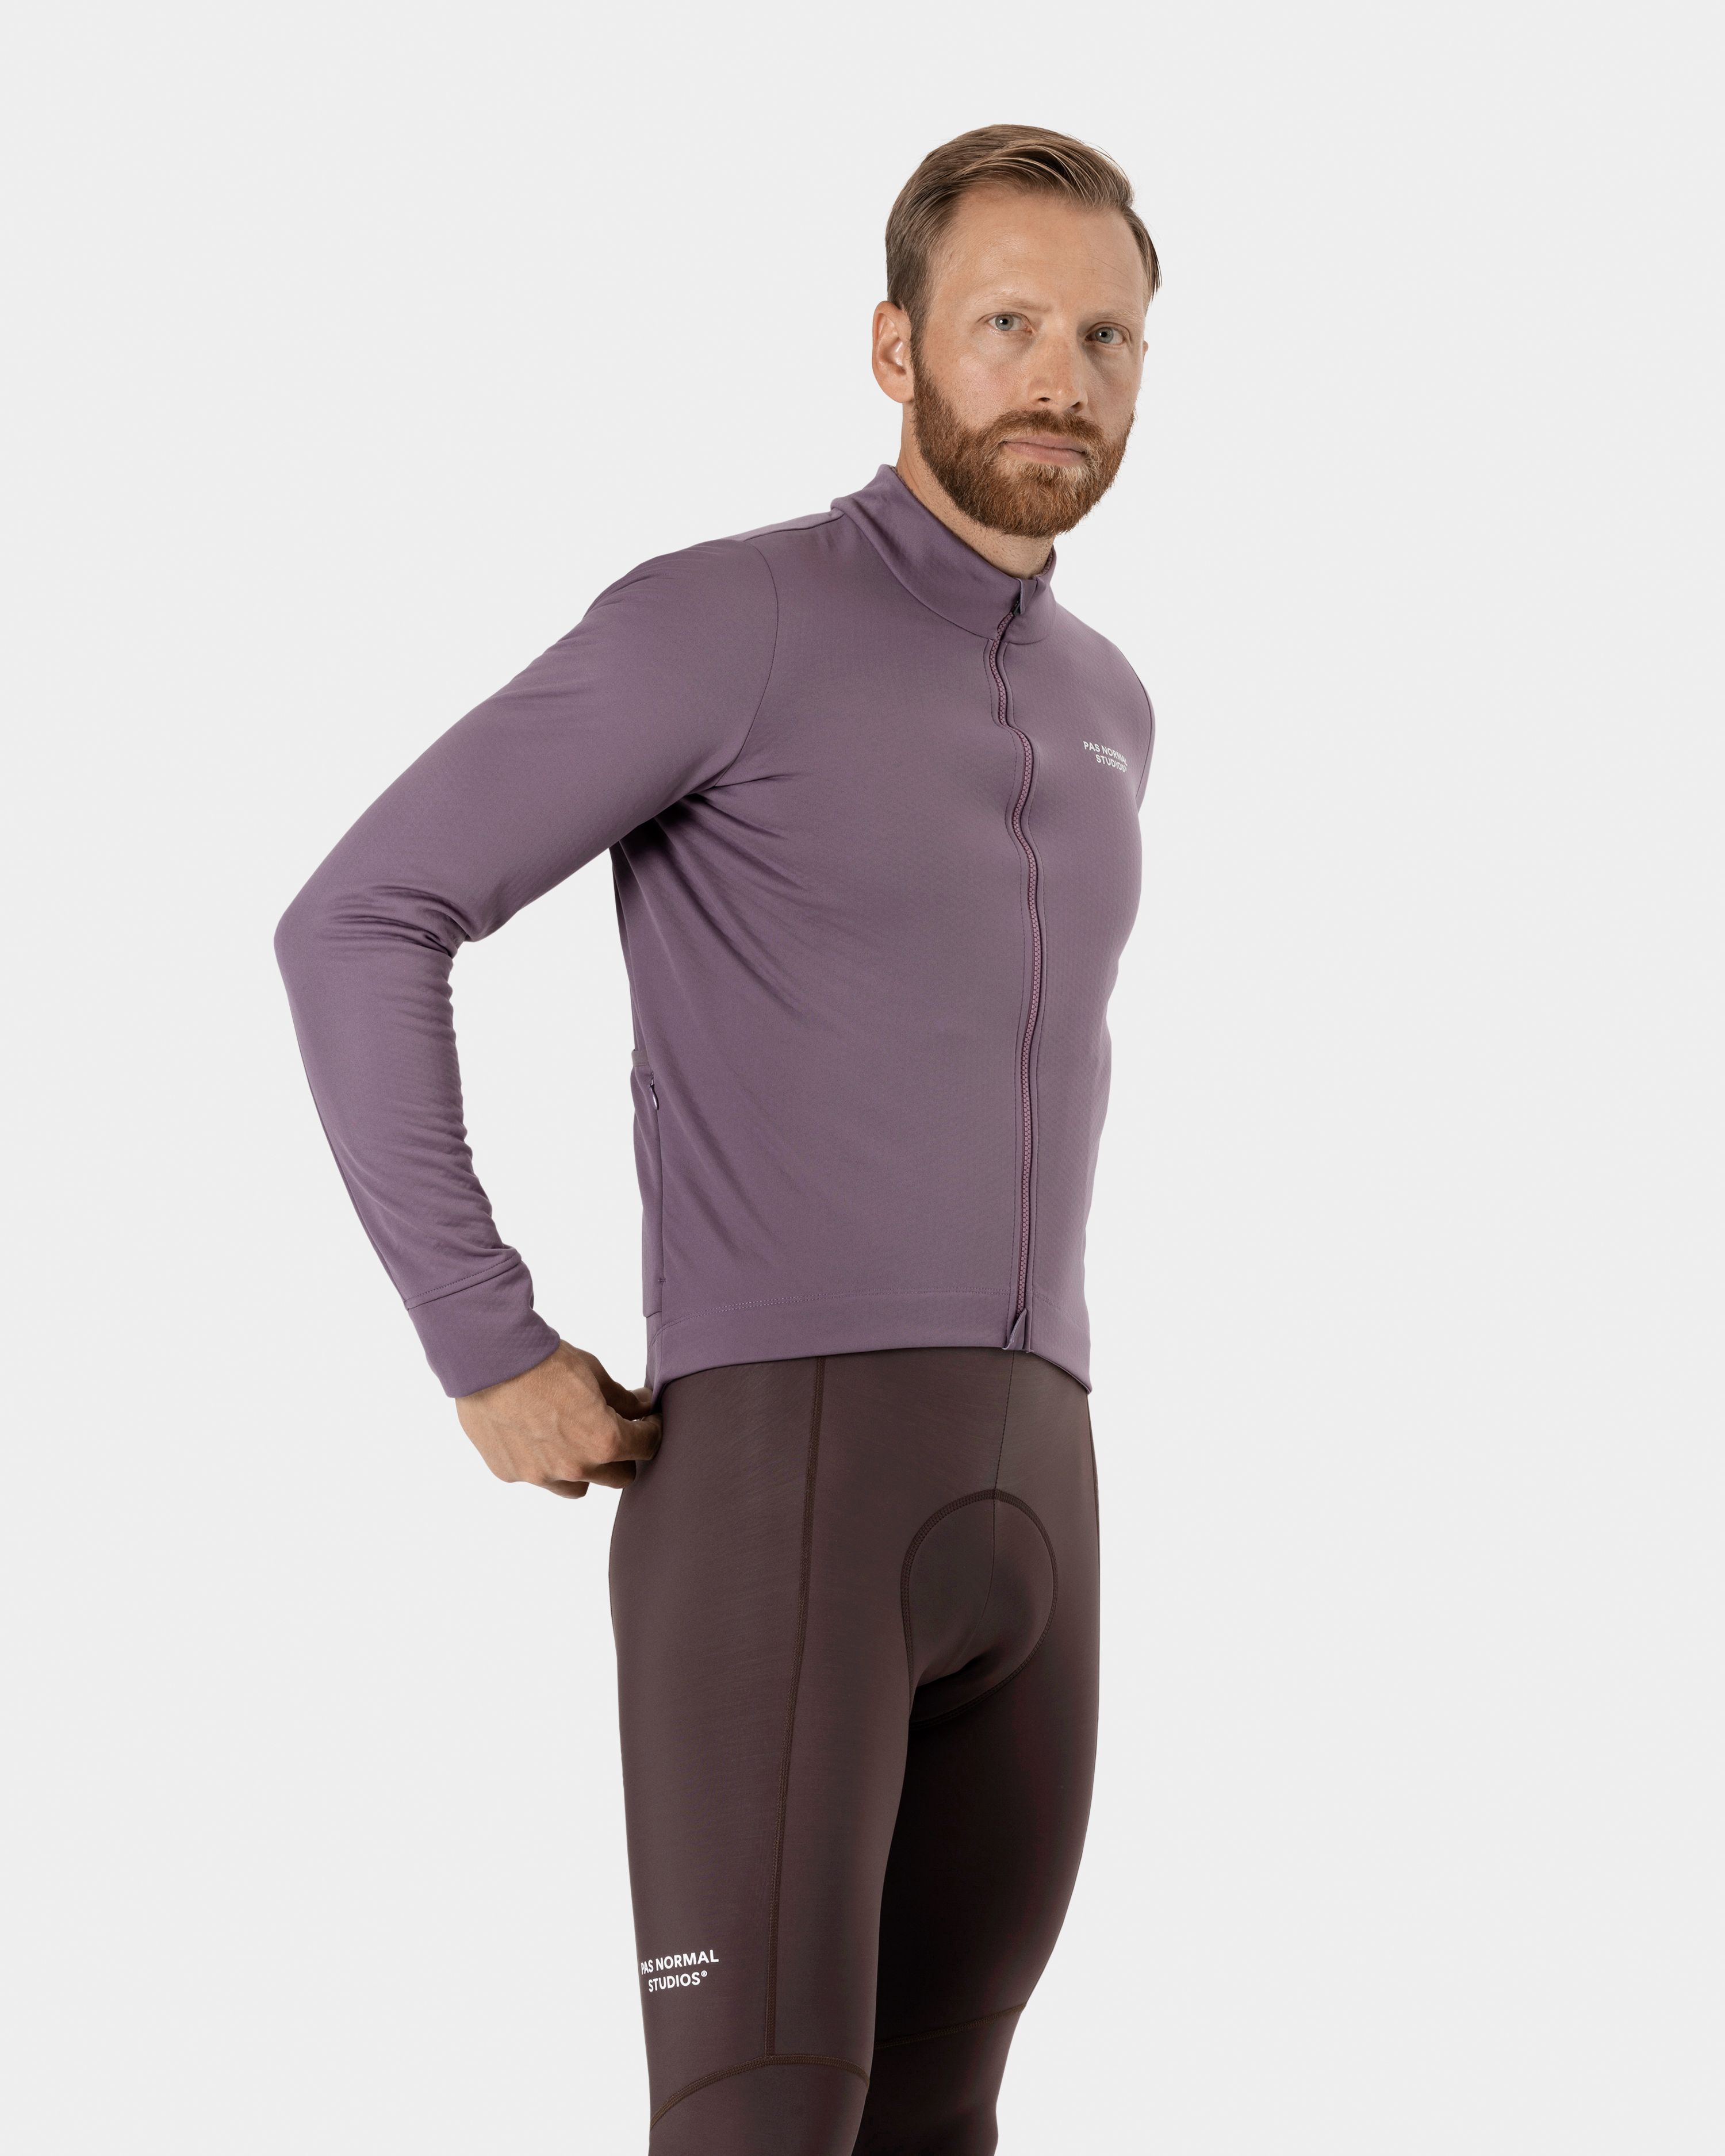 Men's Essential Thermal Long Sleeve Jersey | Pas Normal Studios